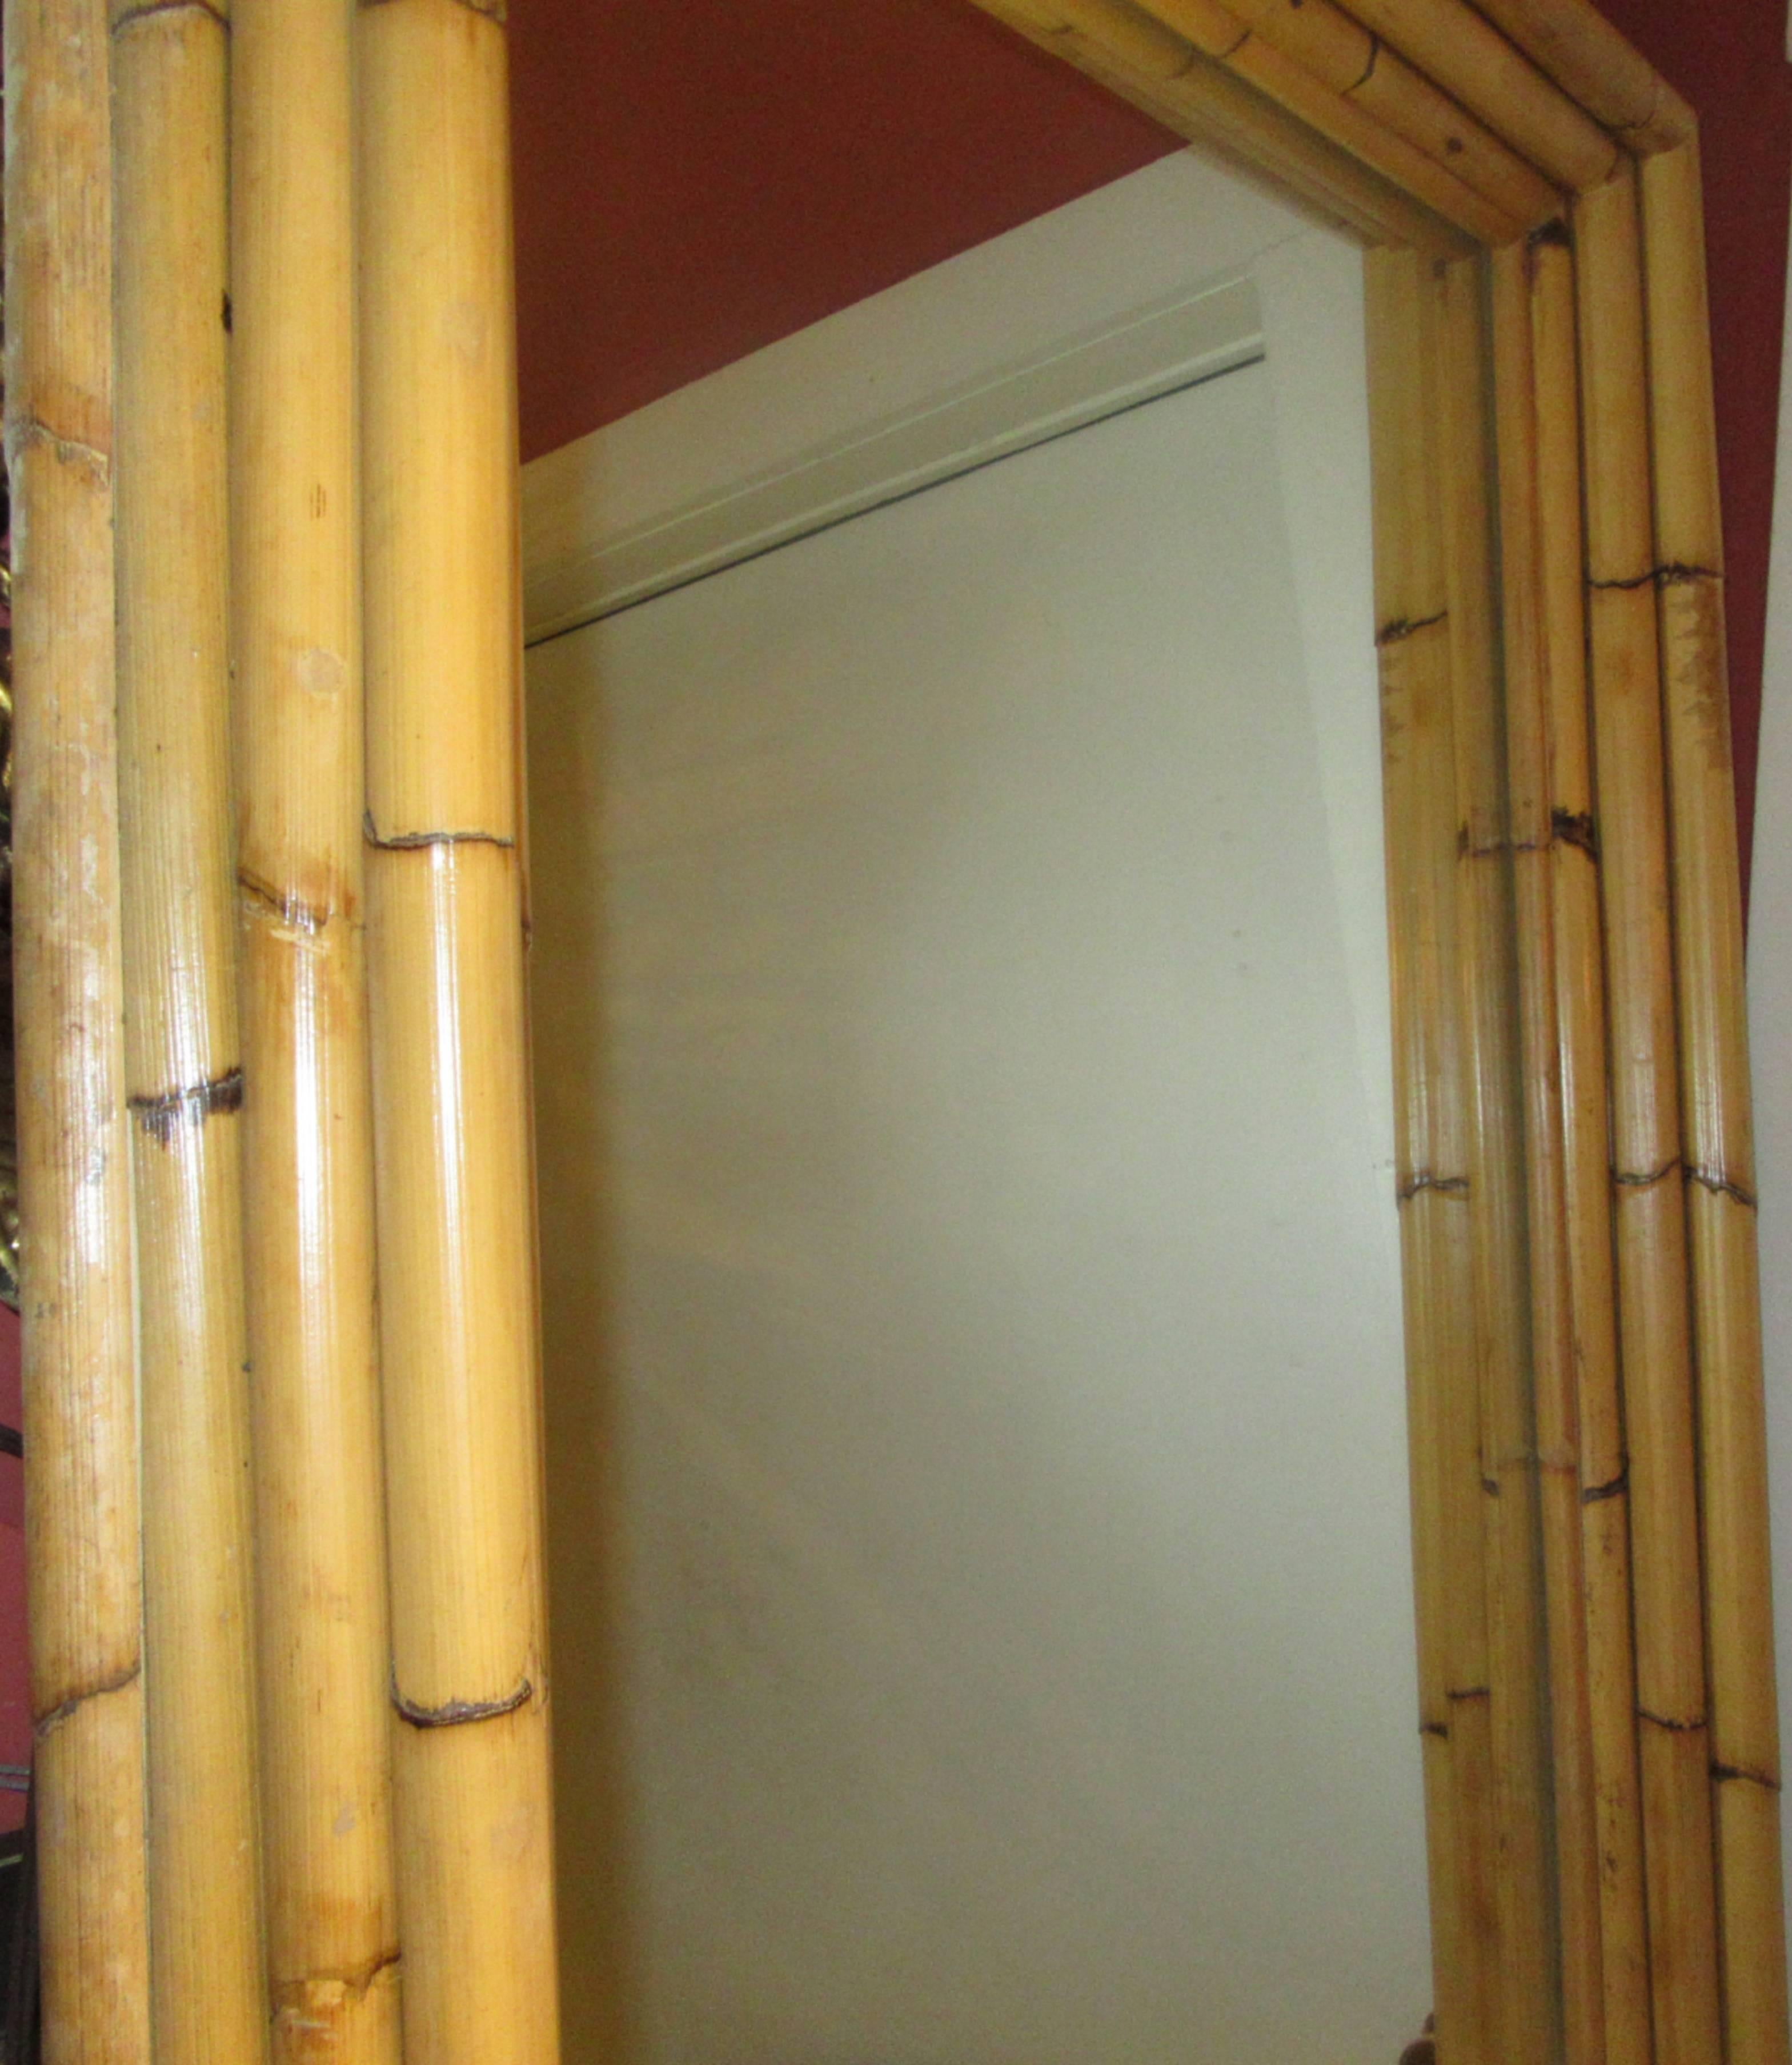 Natural bamboo pole frame wall mirror.